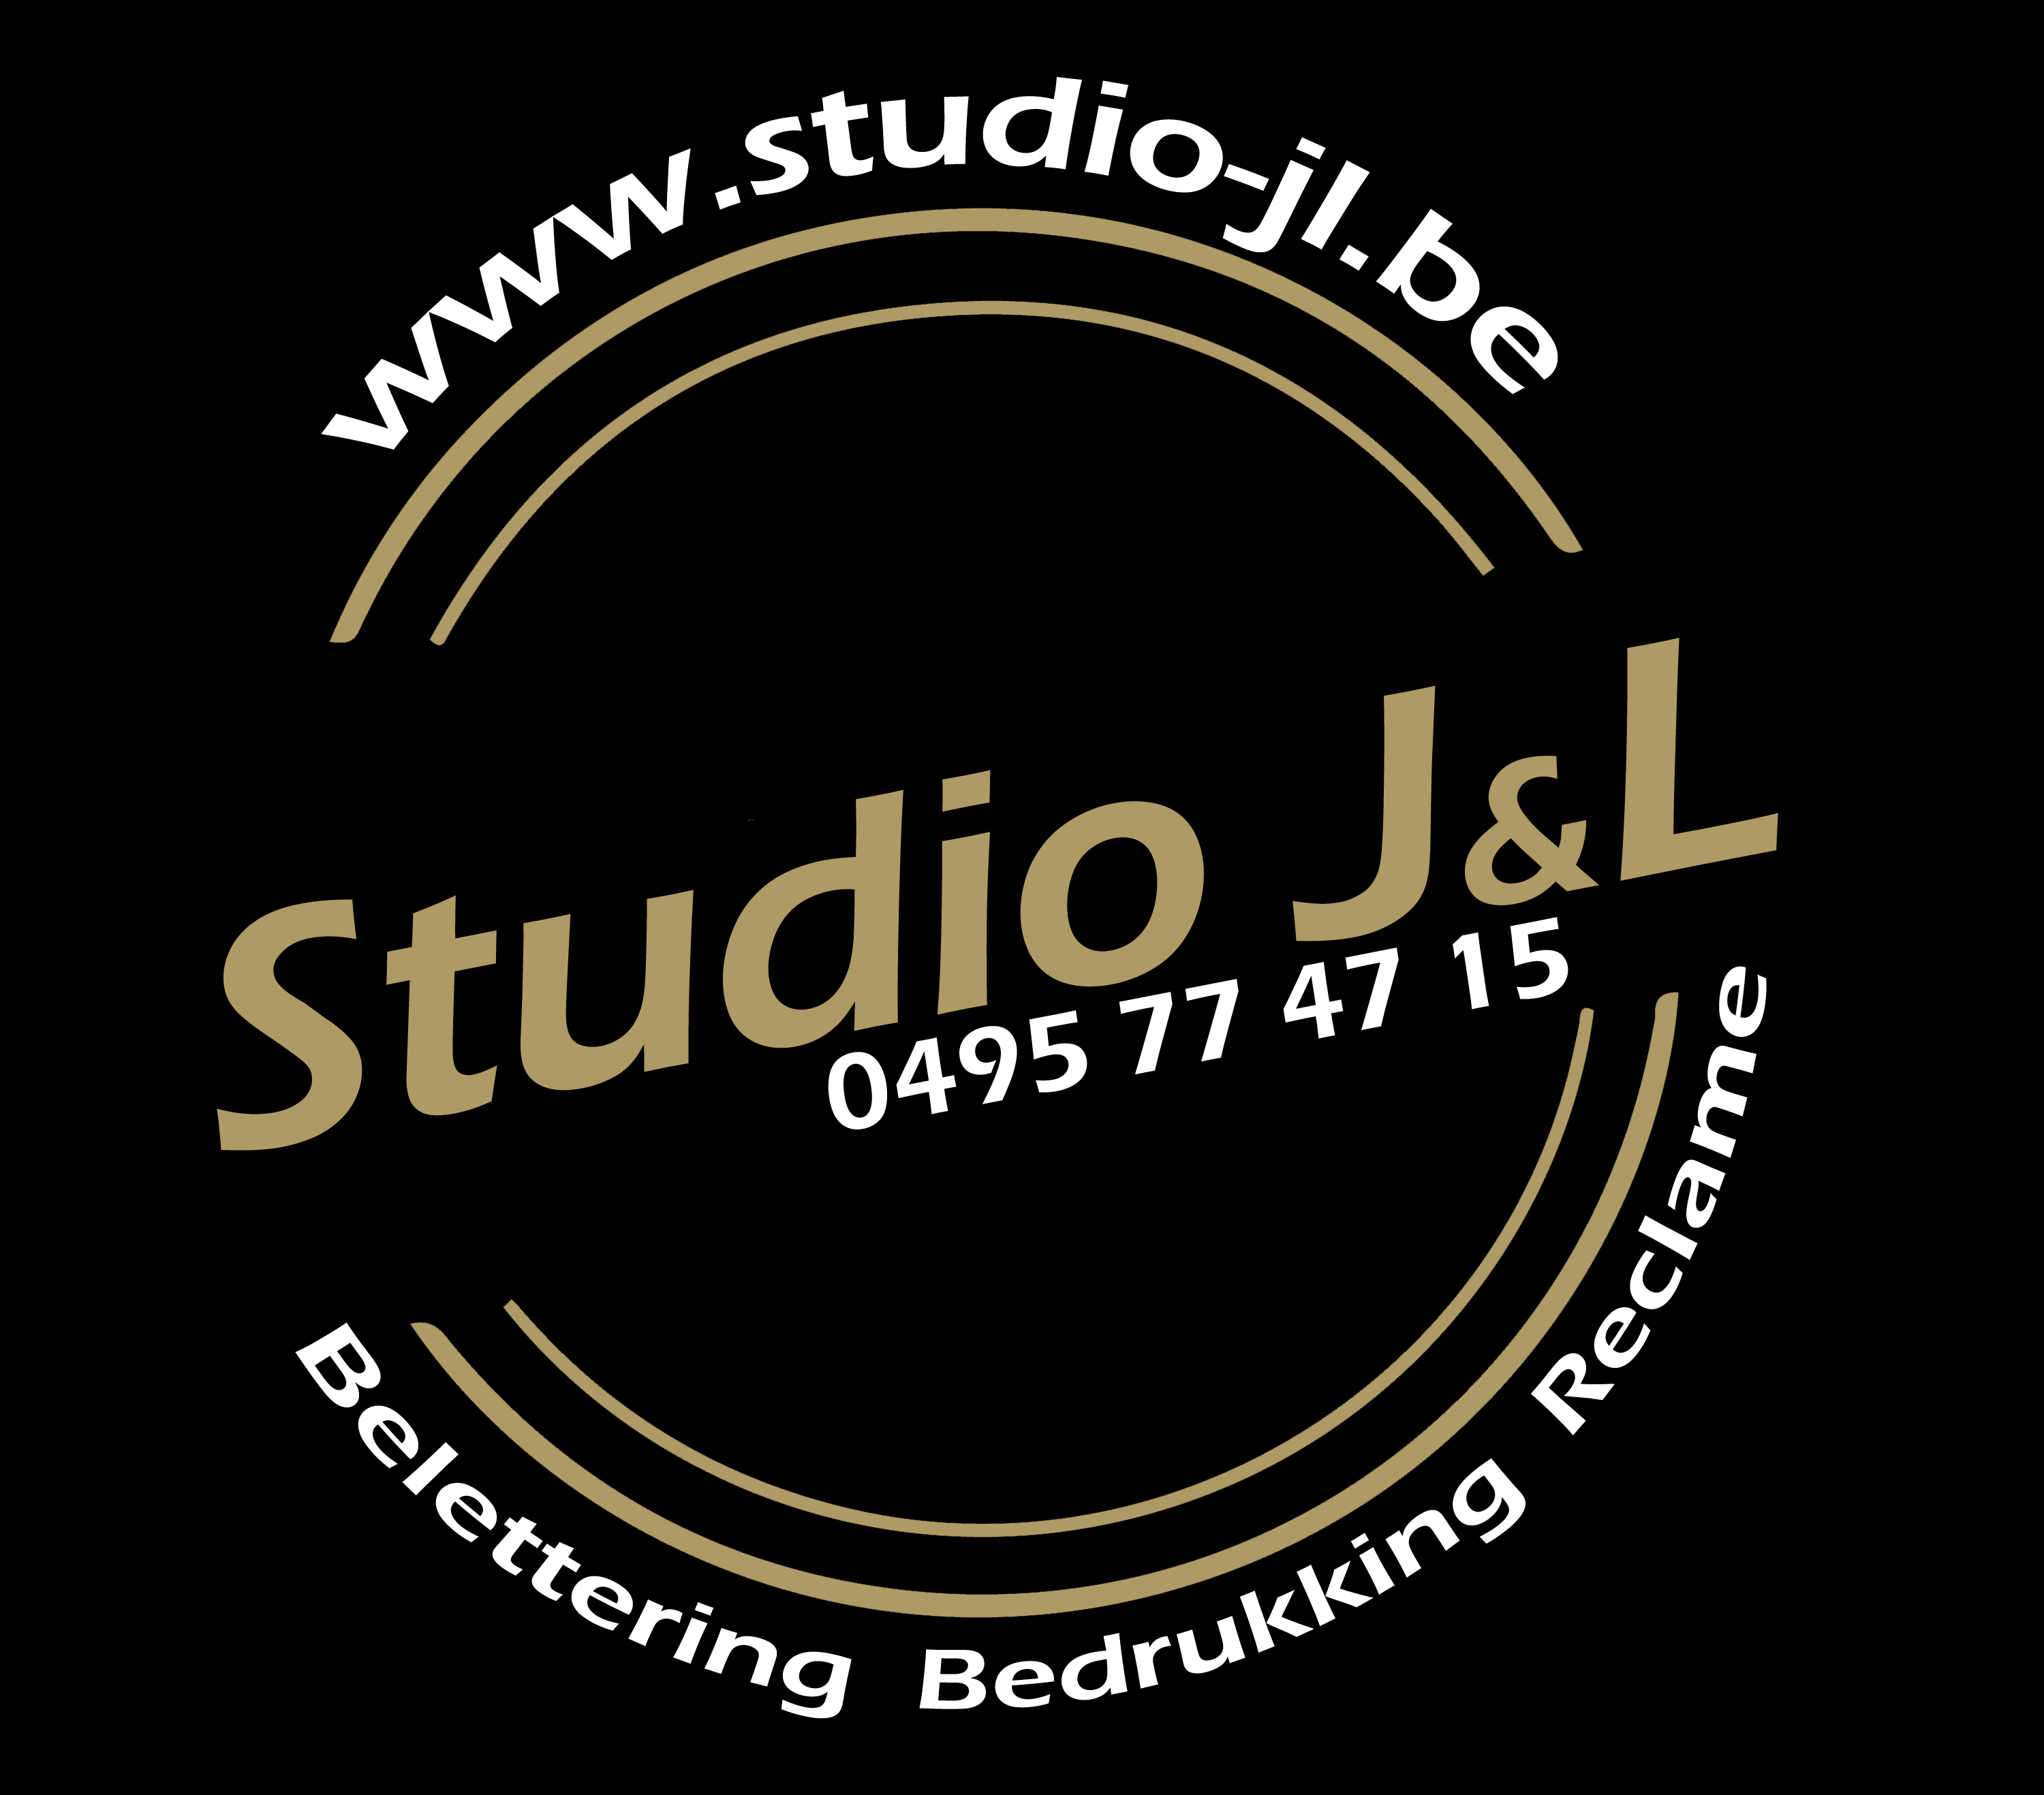 reclamebureau's Gentbrugge Studio J&L